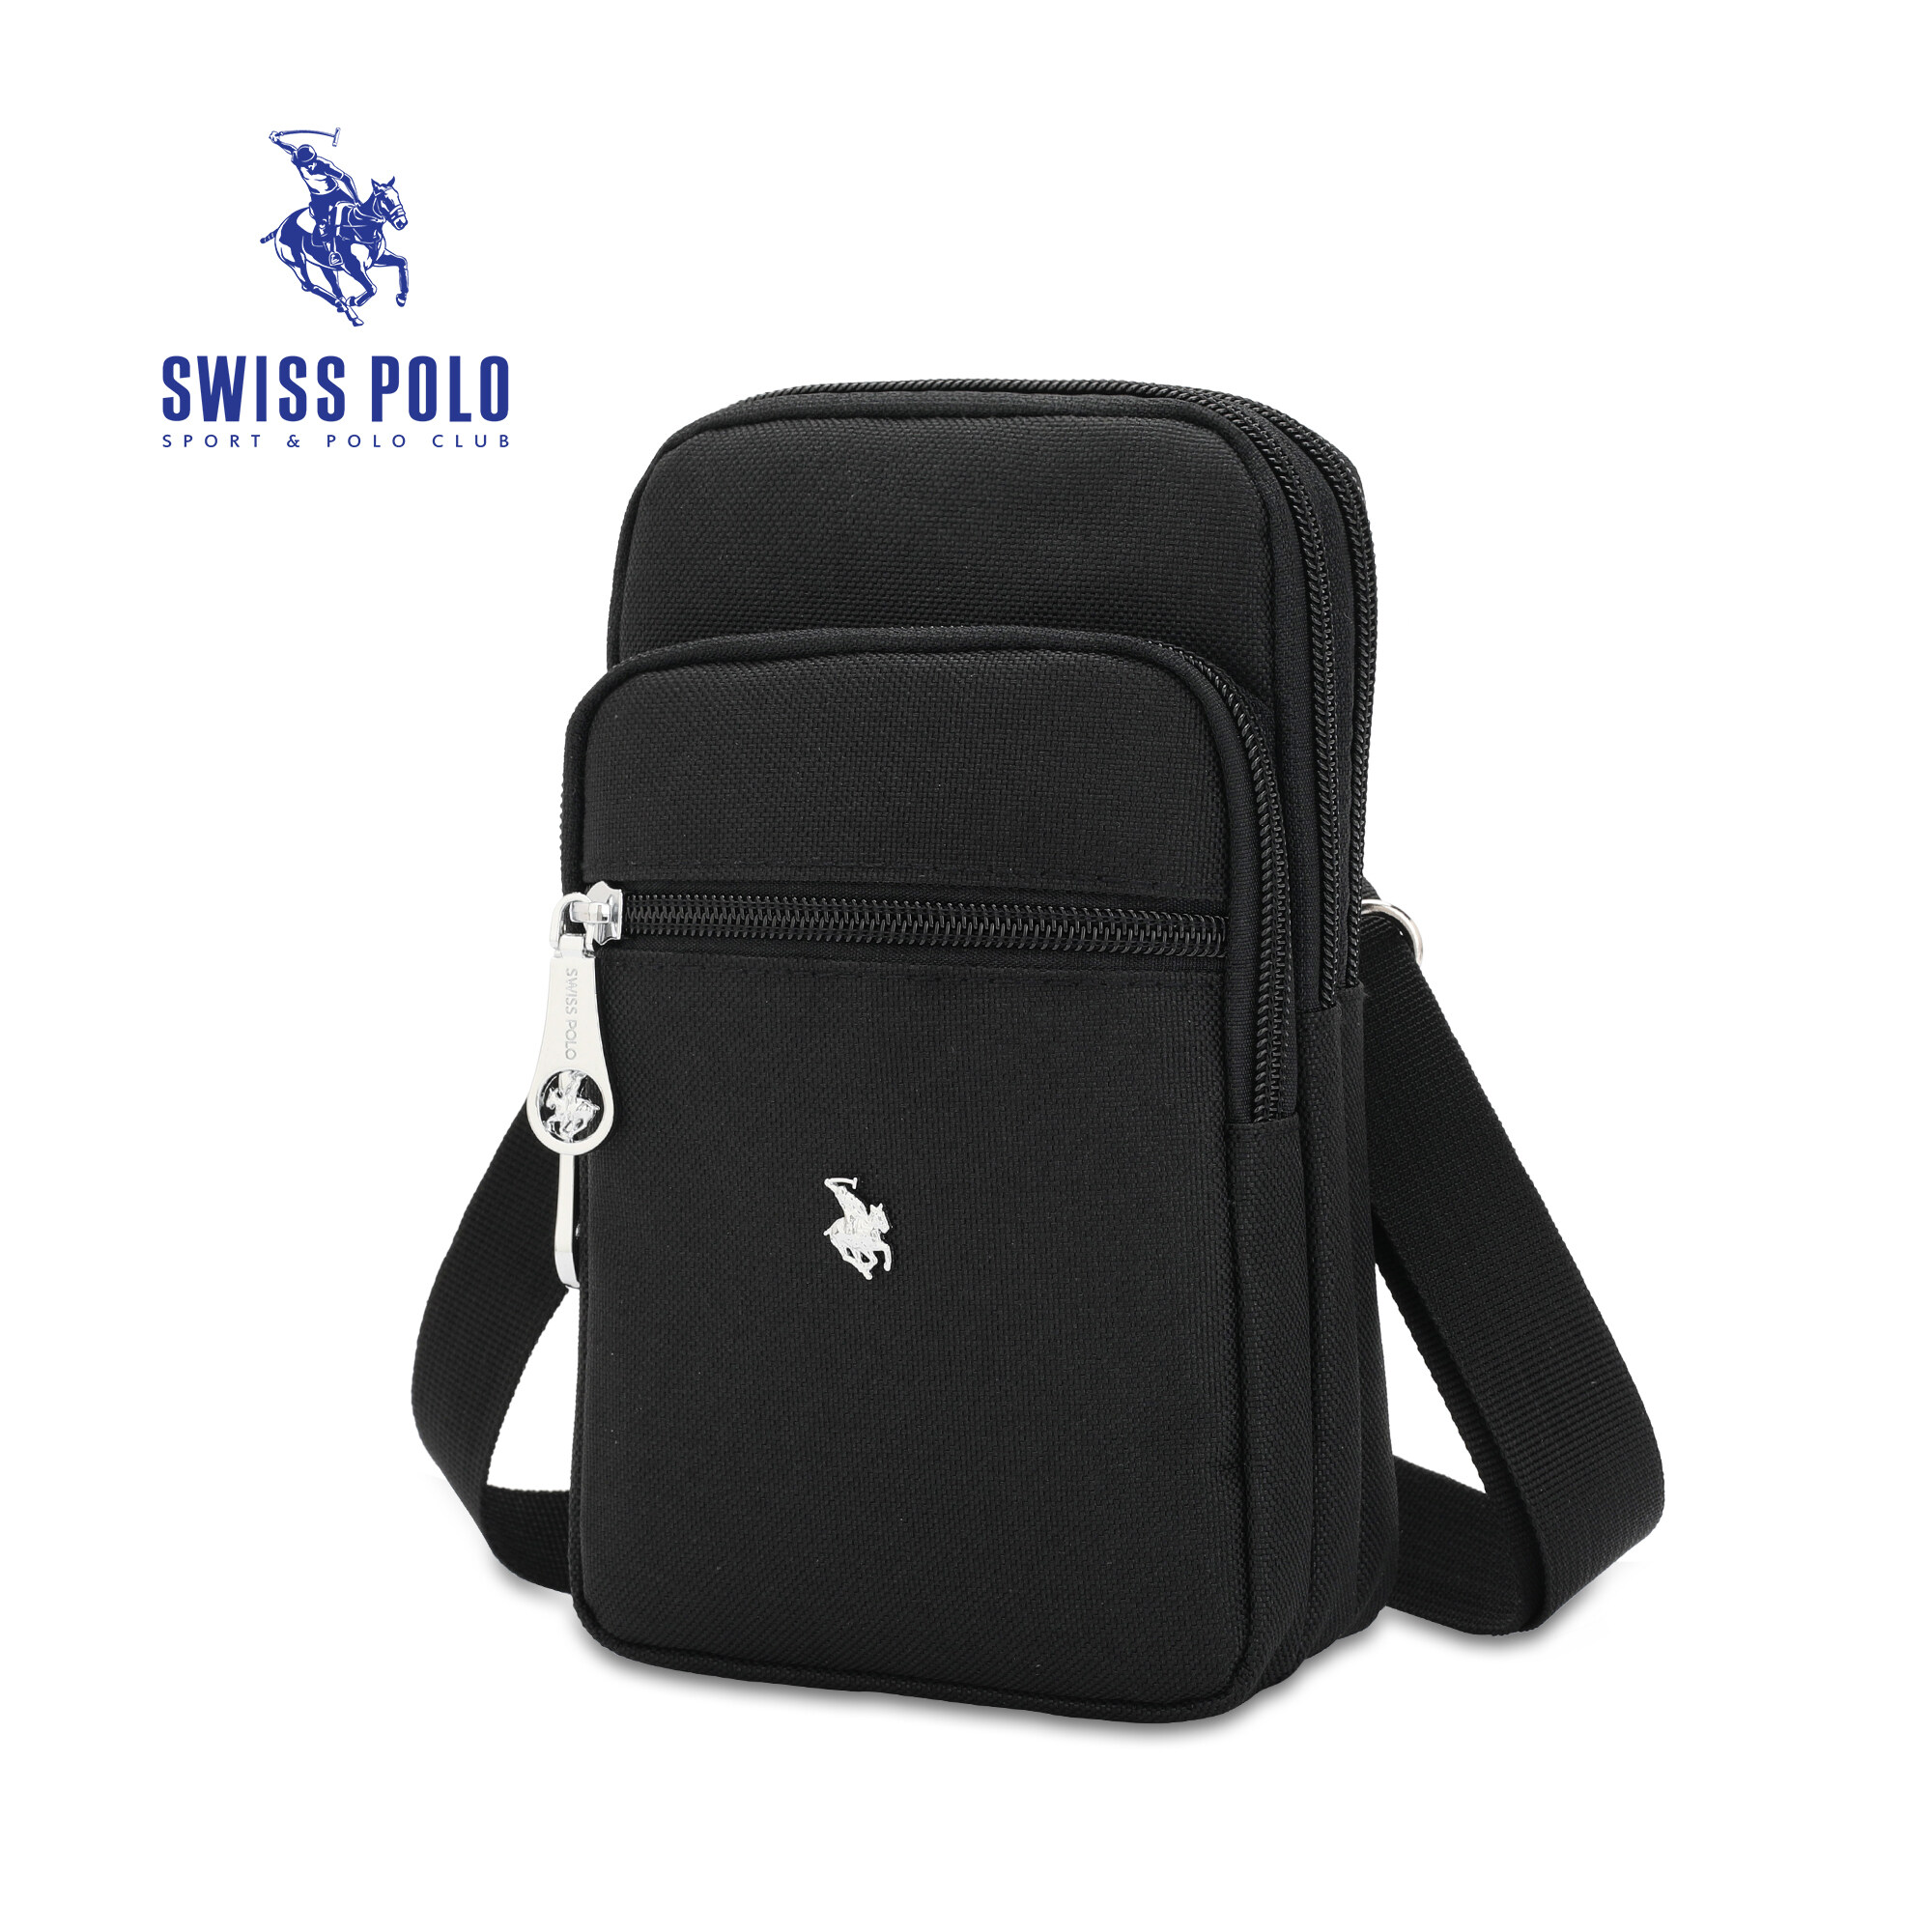 SWISS POLO Pouch/Sling Bag SXN 053 BLACK